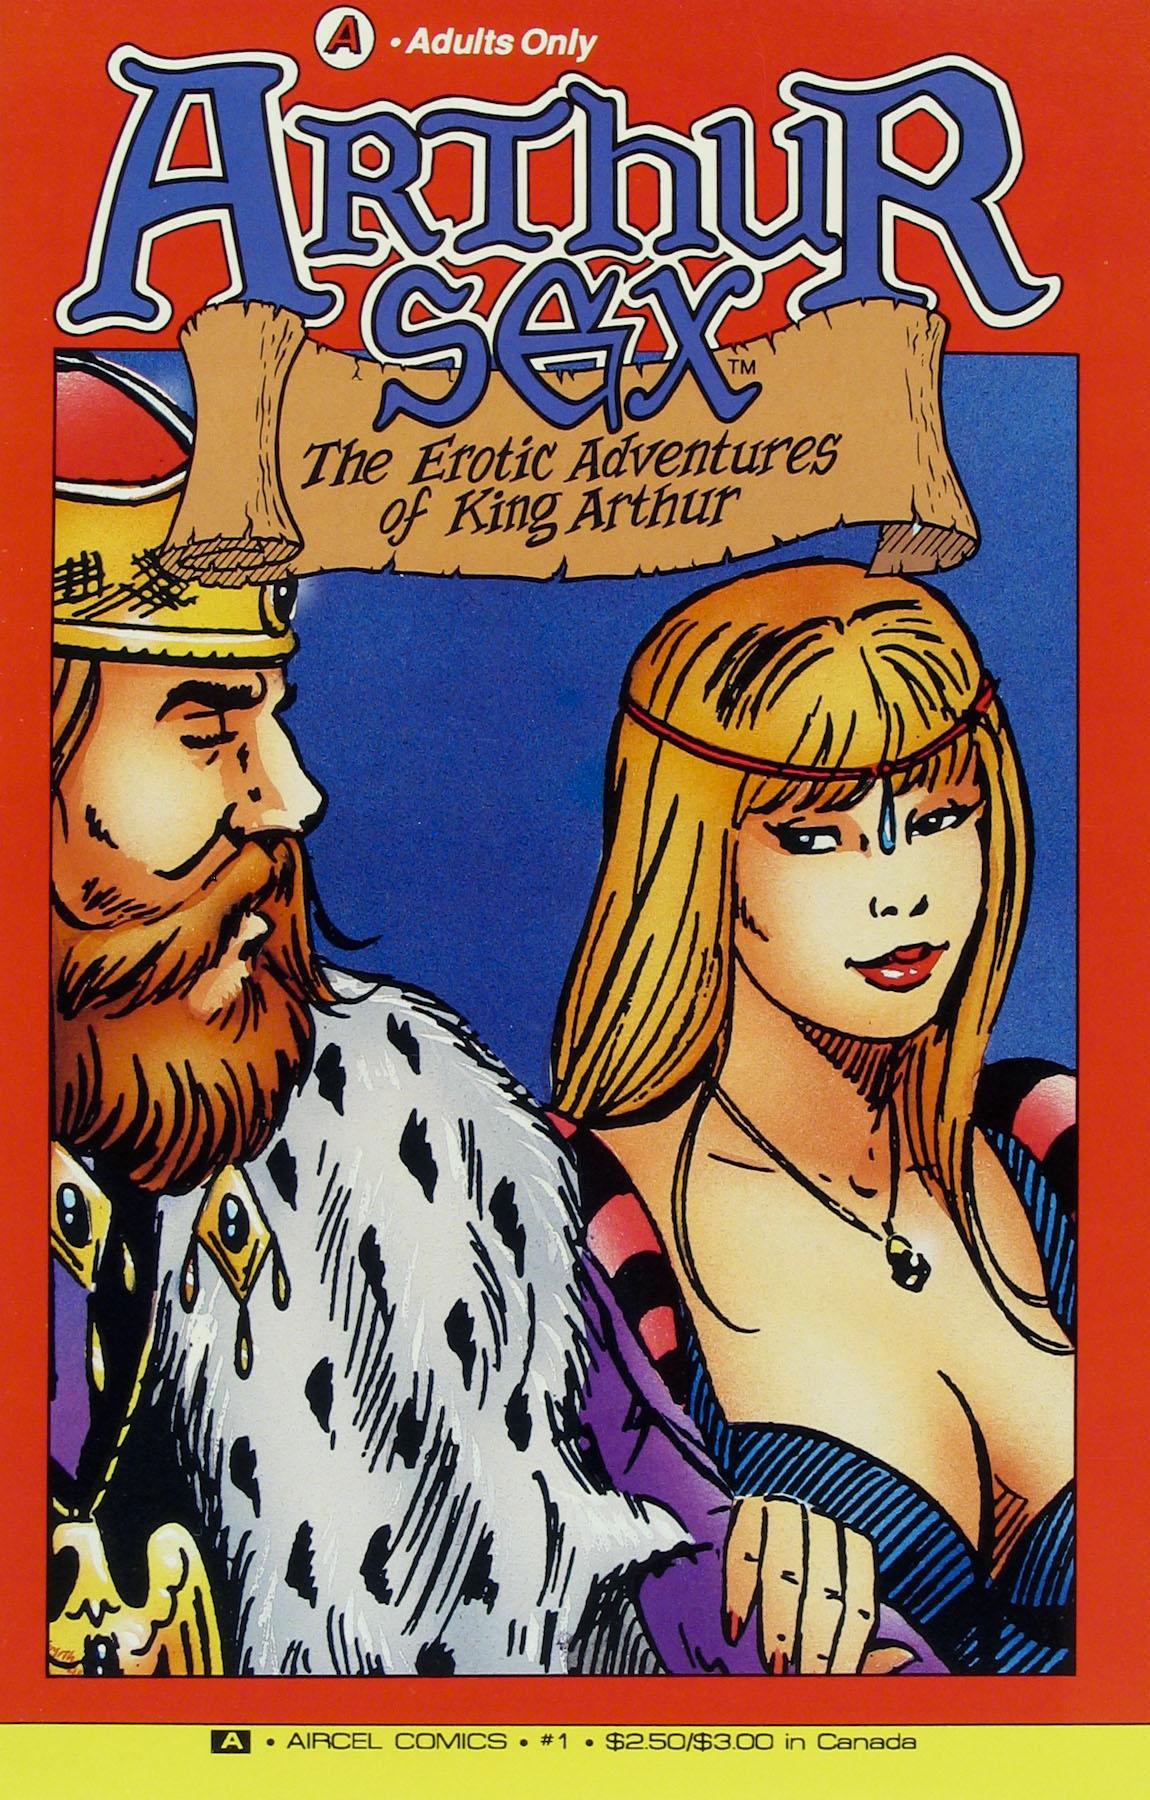 The Erotic Adventures of King Arthur 1-5